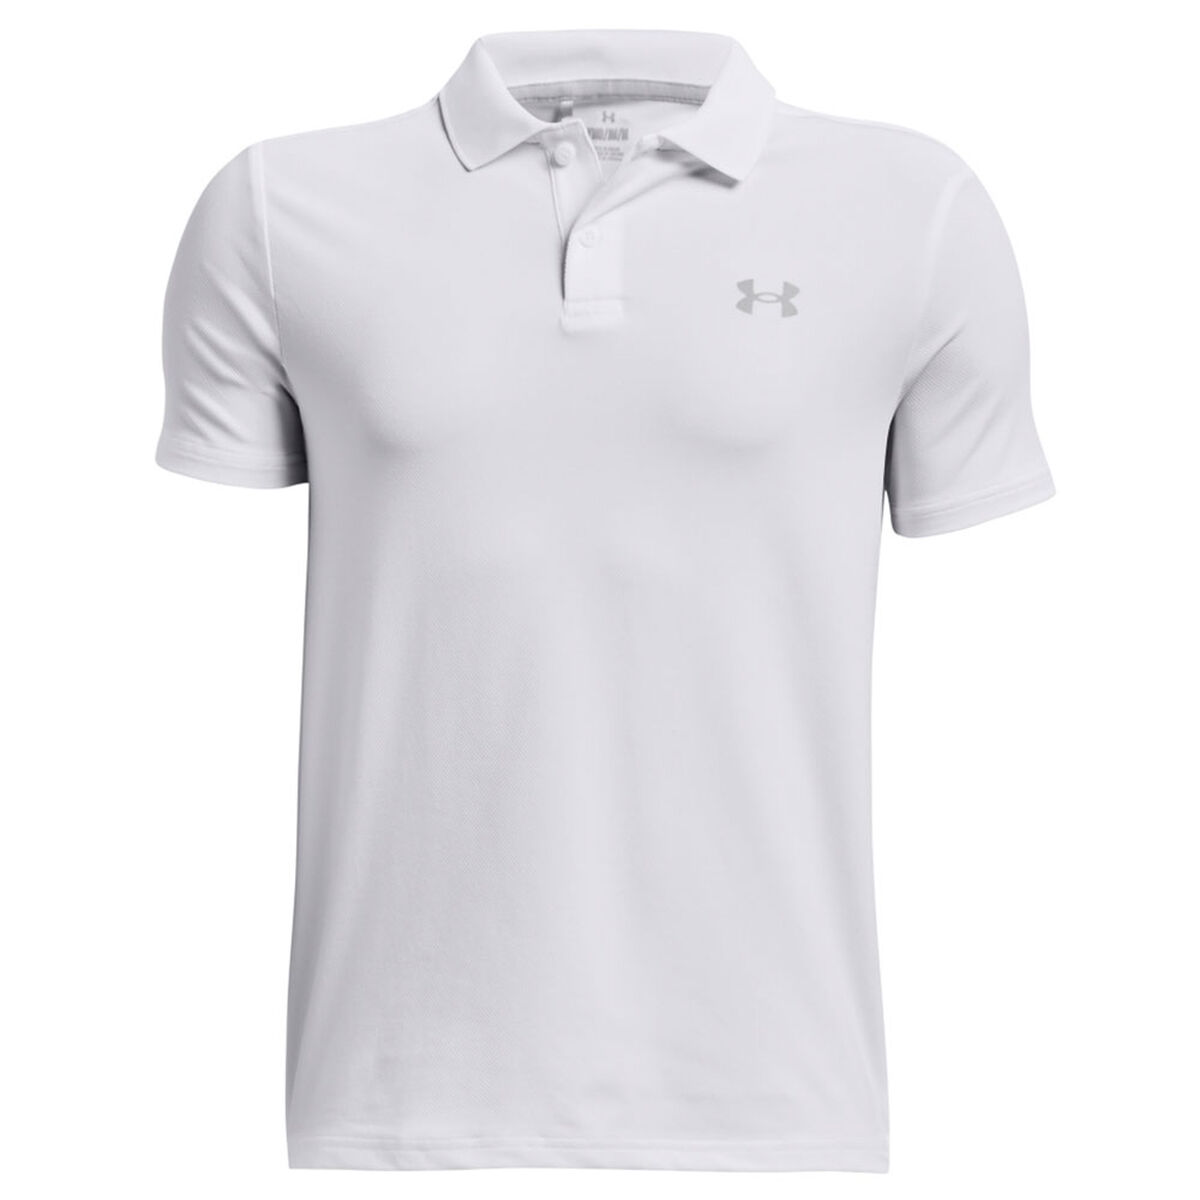 Under Armour Junior Performance Golf Polo Shirt, Unisex, White/pitch gray, 11-12 years | American Golf von Under Armour